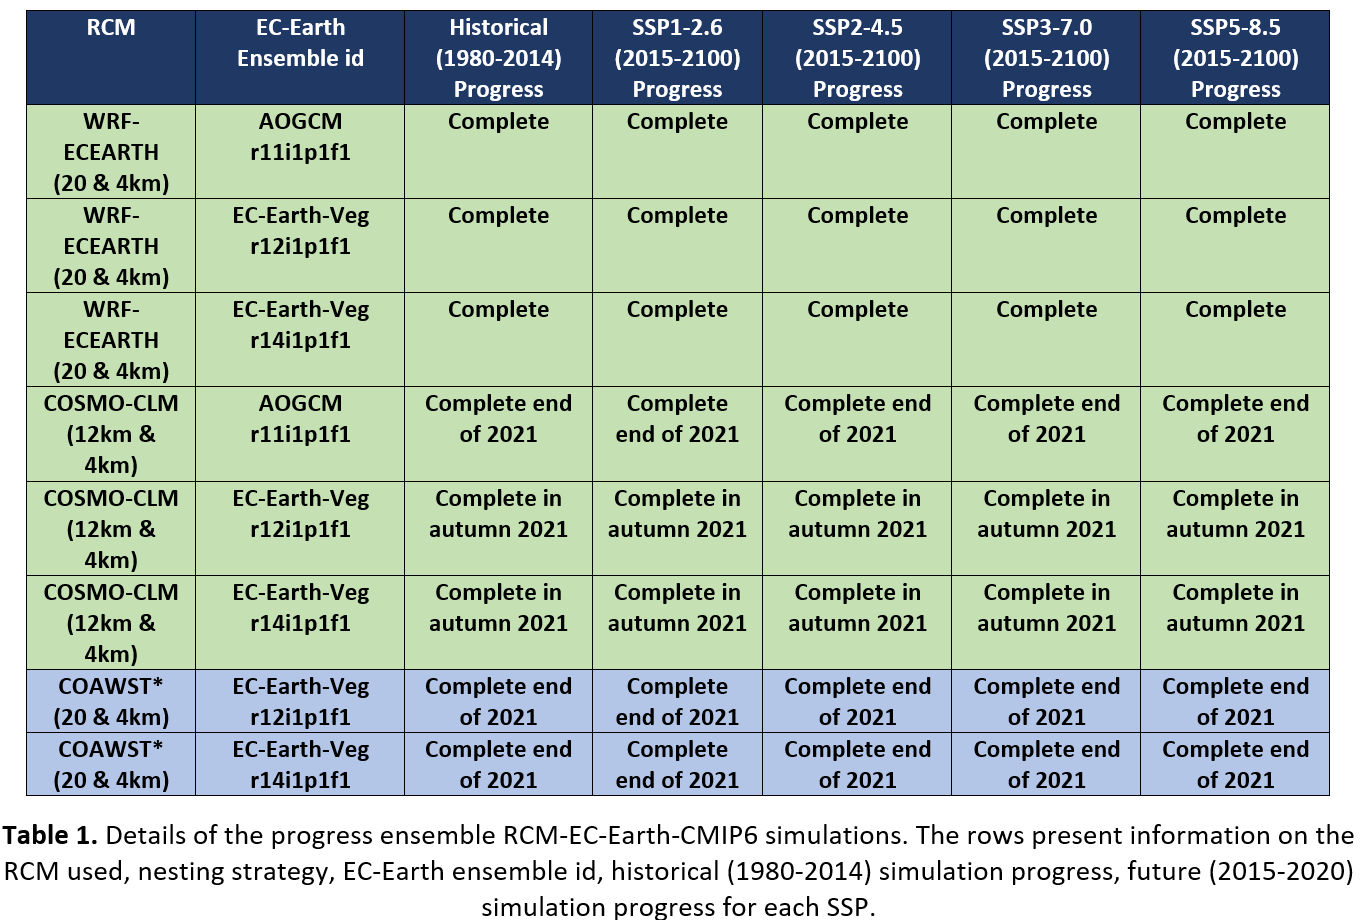 Table 1. Details of the progress ensemble RCM-EC-Earth-CMIP6 simulations. 